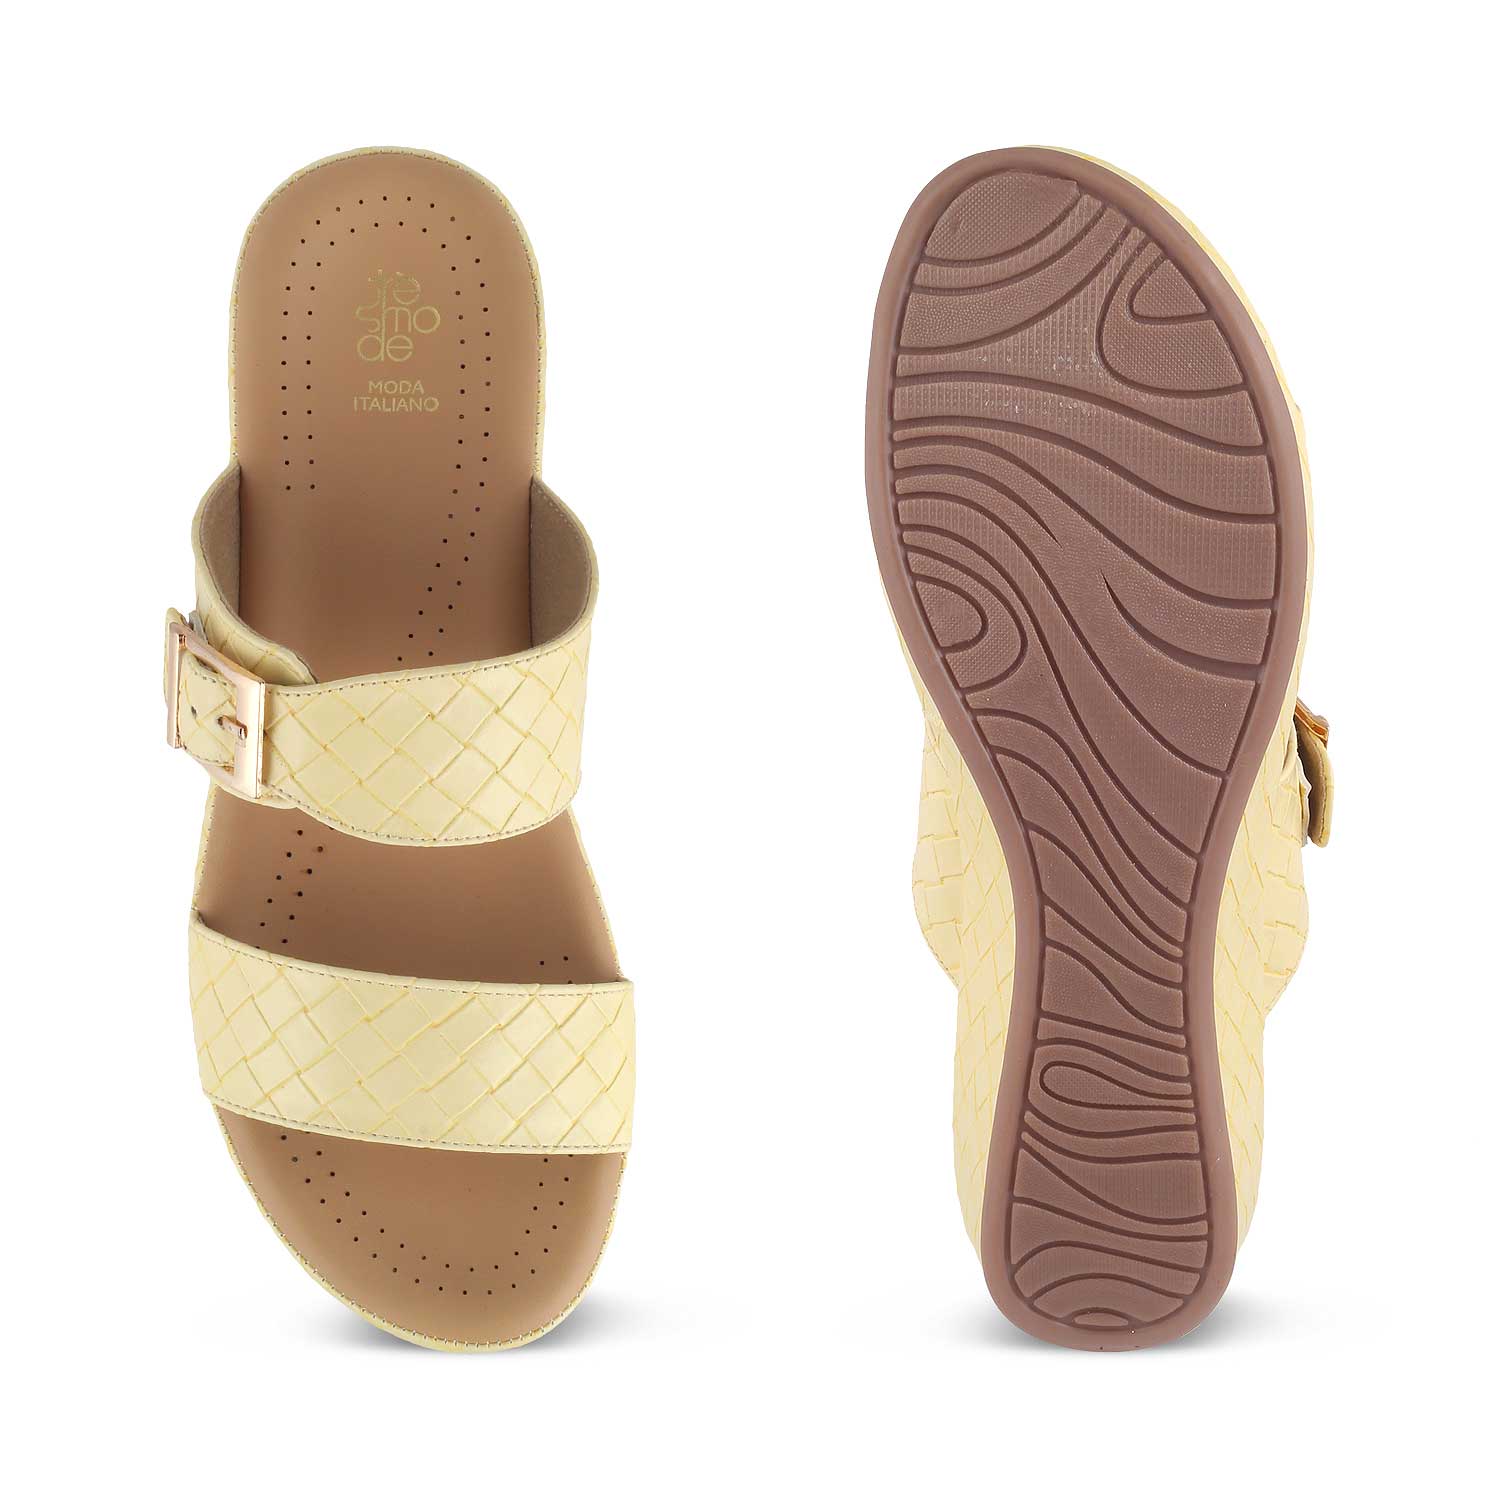 Tresmode-The Argos Yellow Women's Casual Wedge Sandals Tresmode-Tresmode